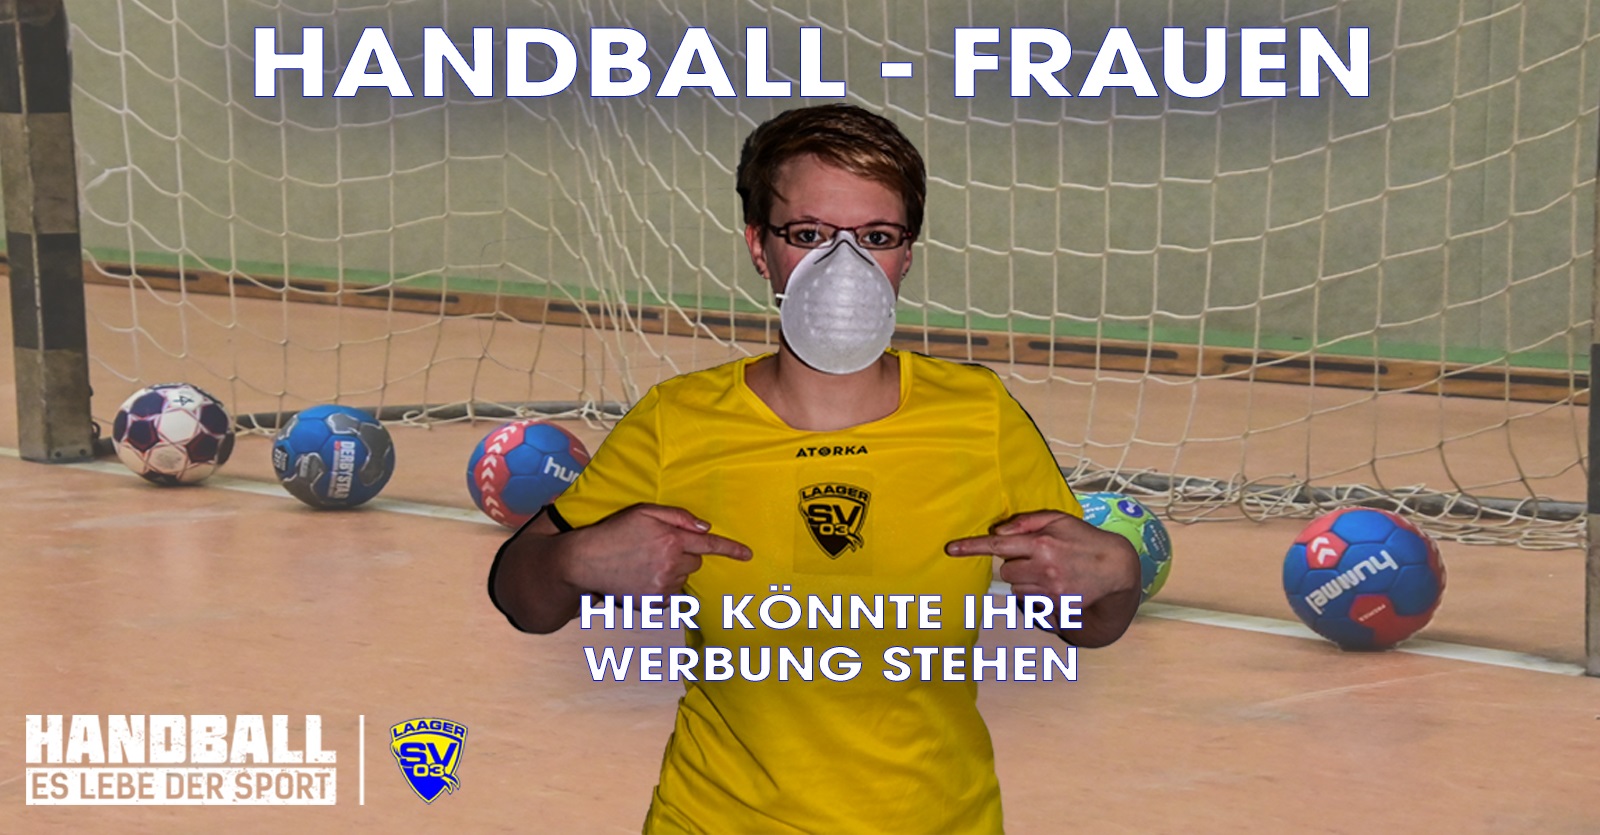 Laager SV Handball Frauen - Werbung